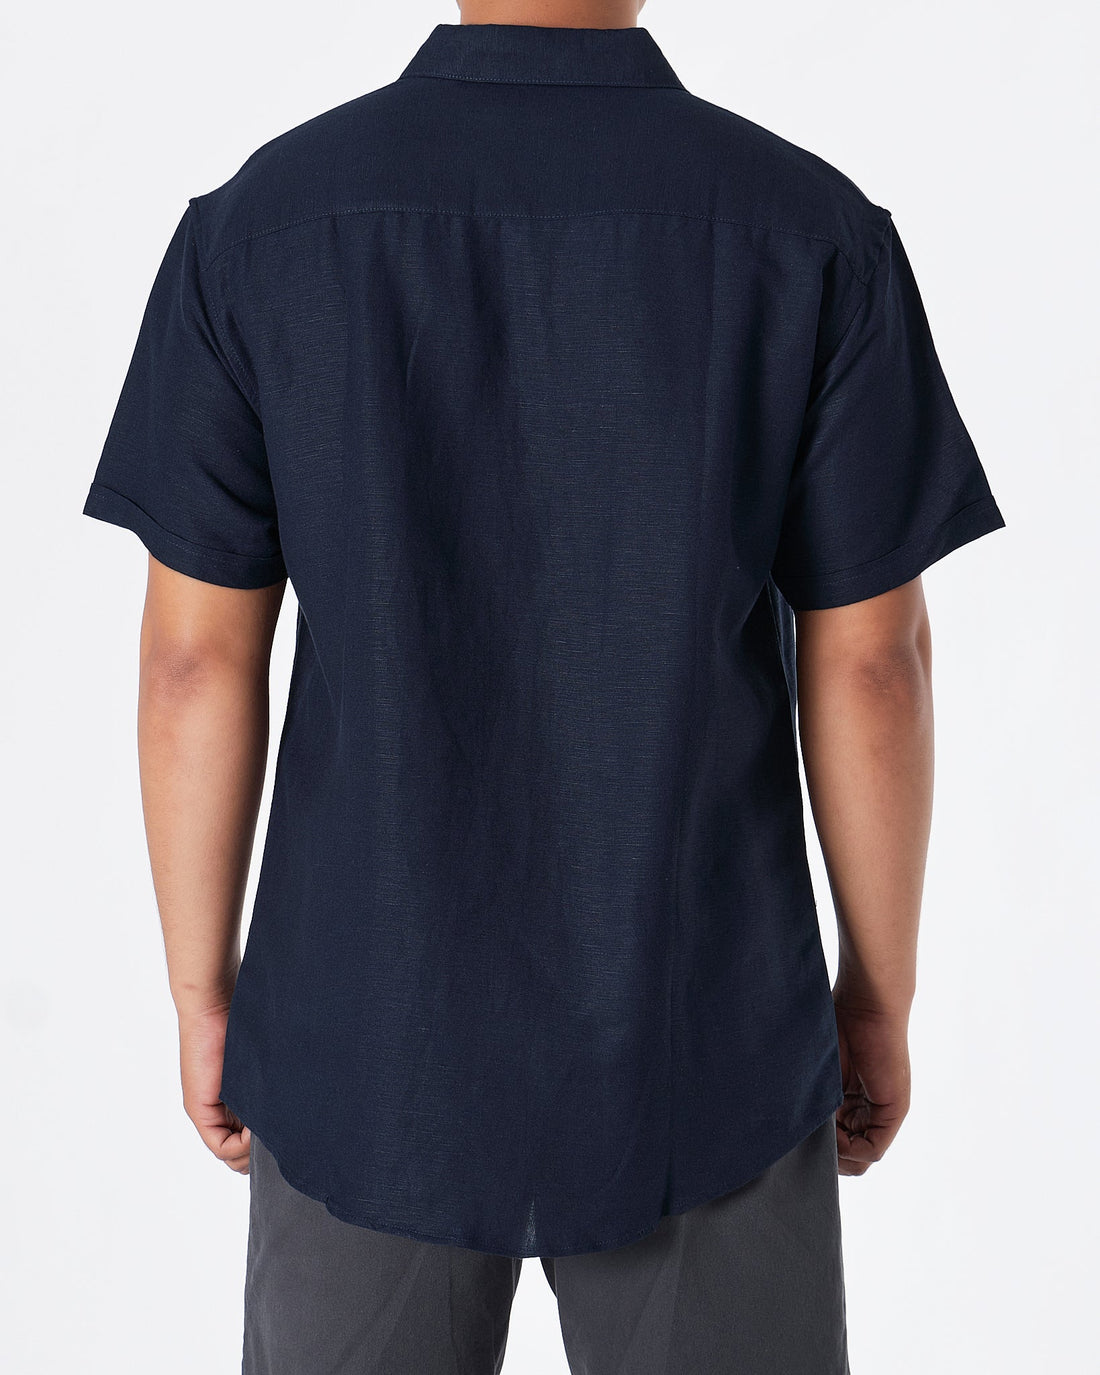 MOI OUTFIT-RL Cotton Men Blue Shirts Short Sleeve 28.90